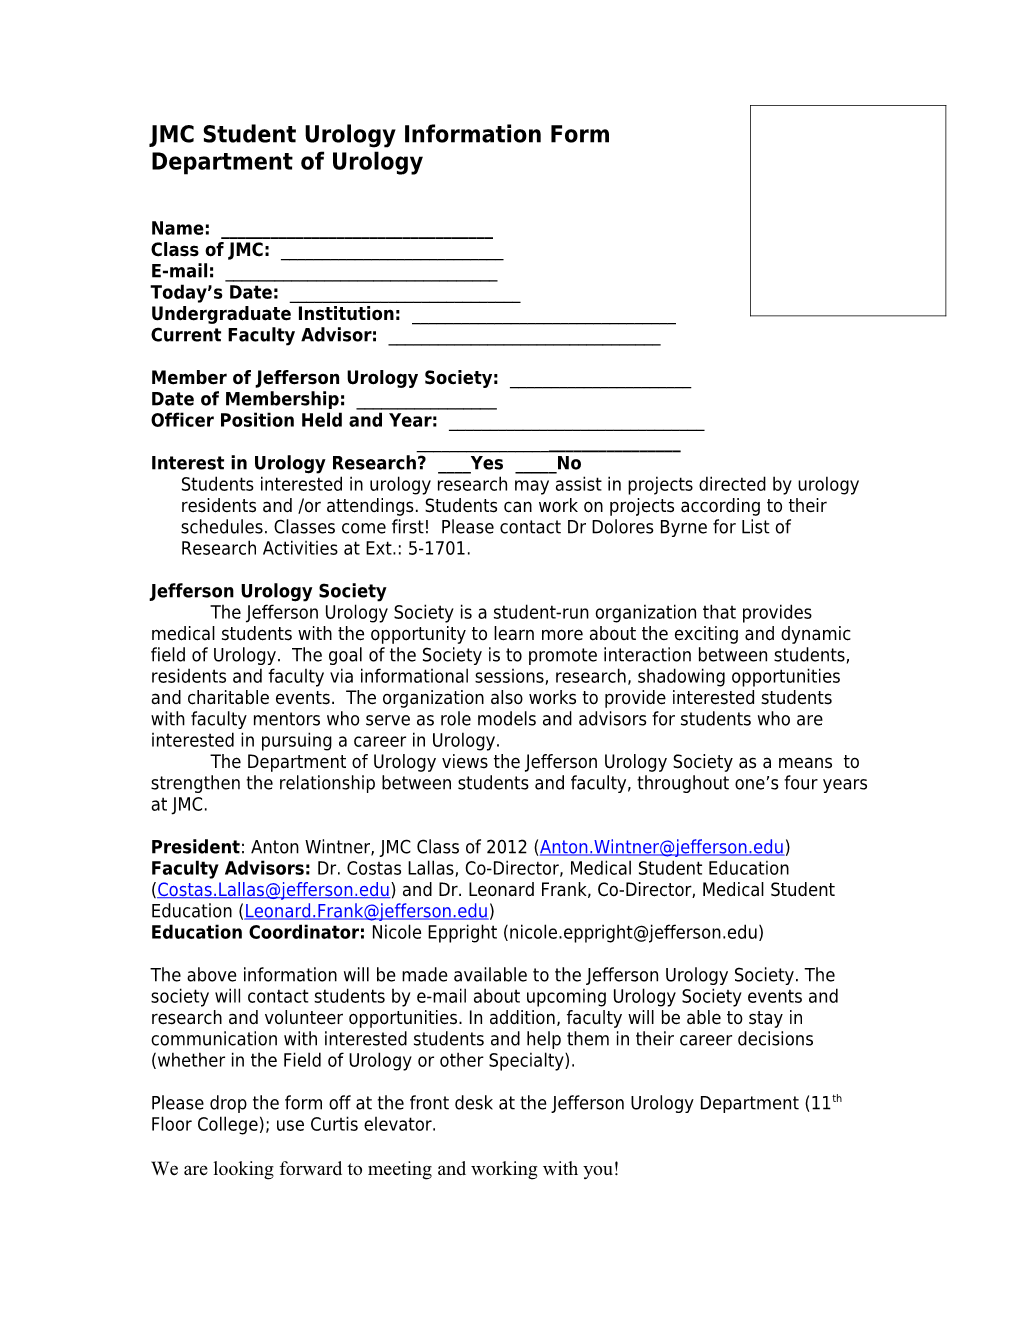 JMC Urology Information Form